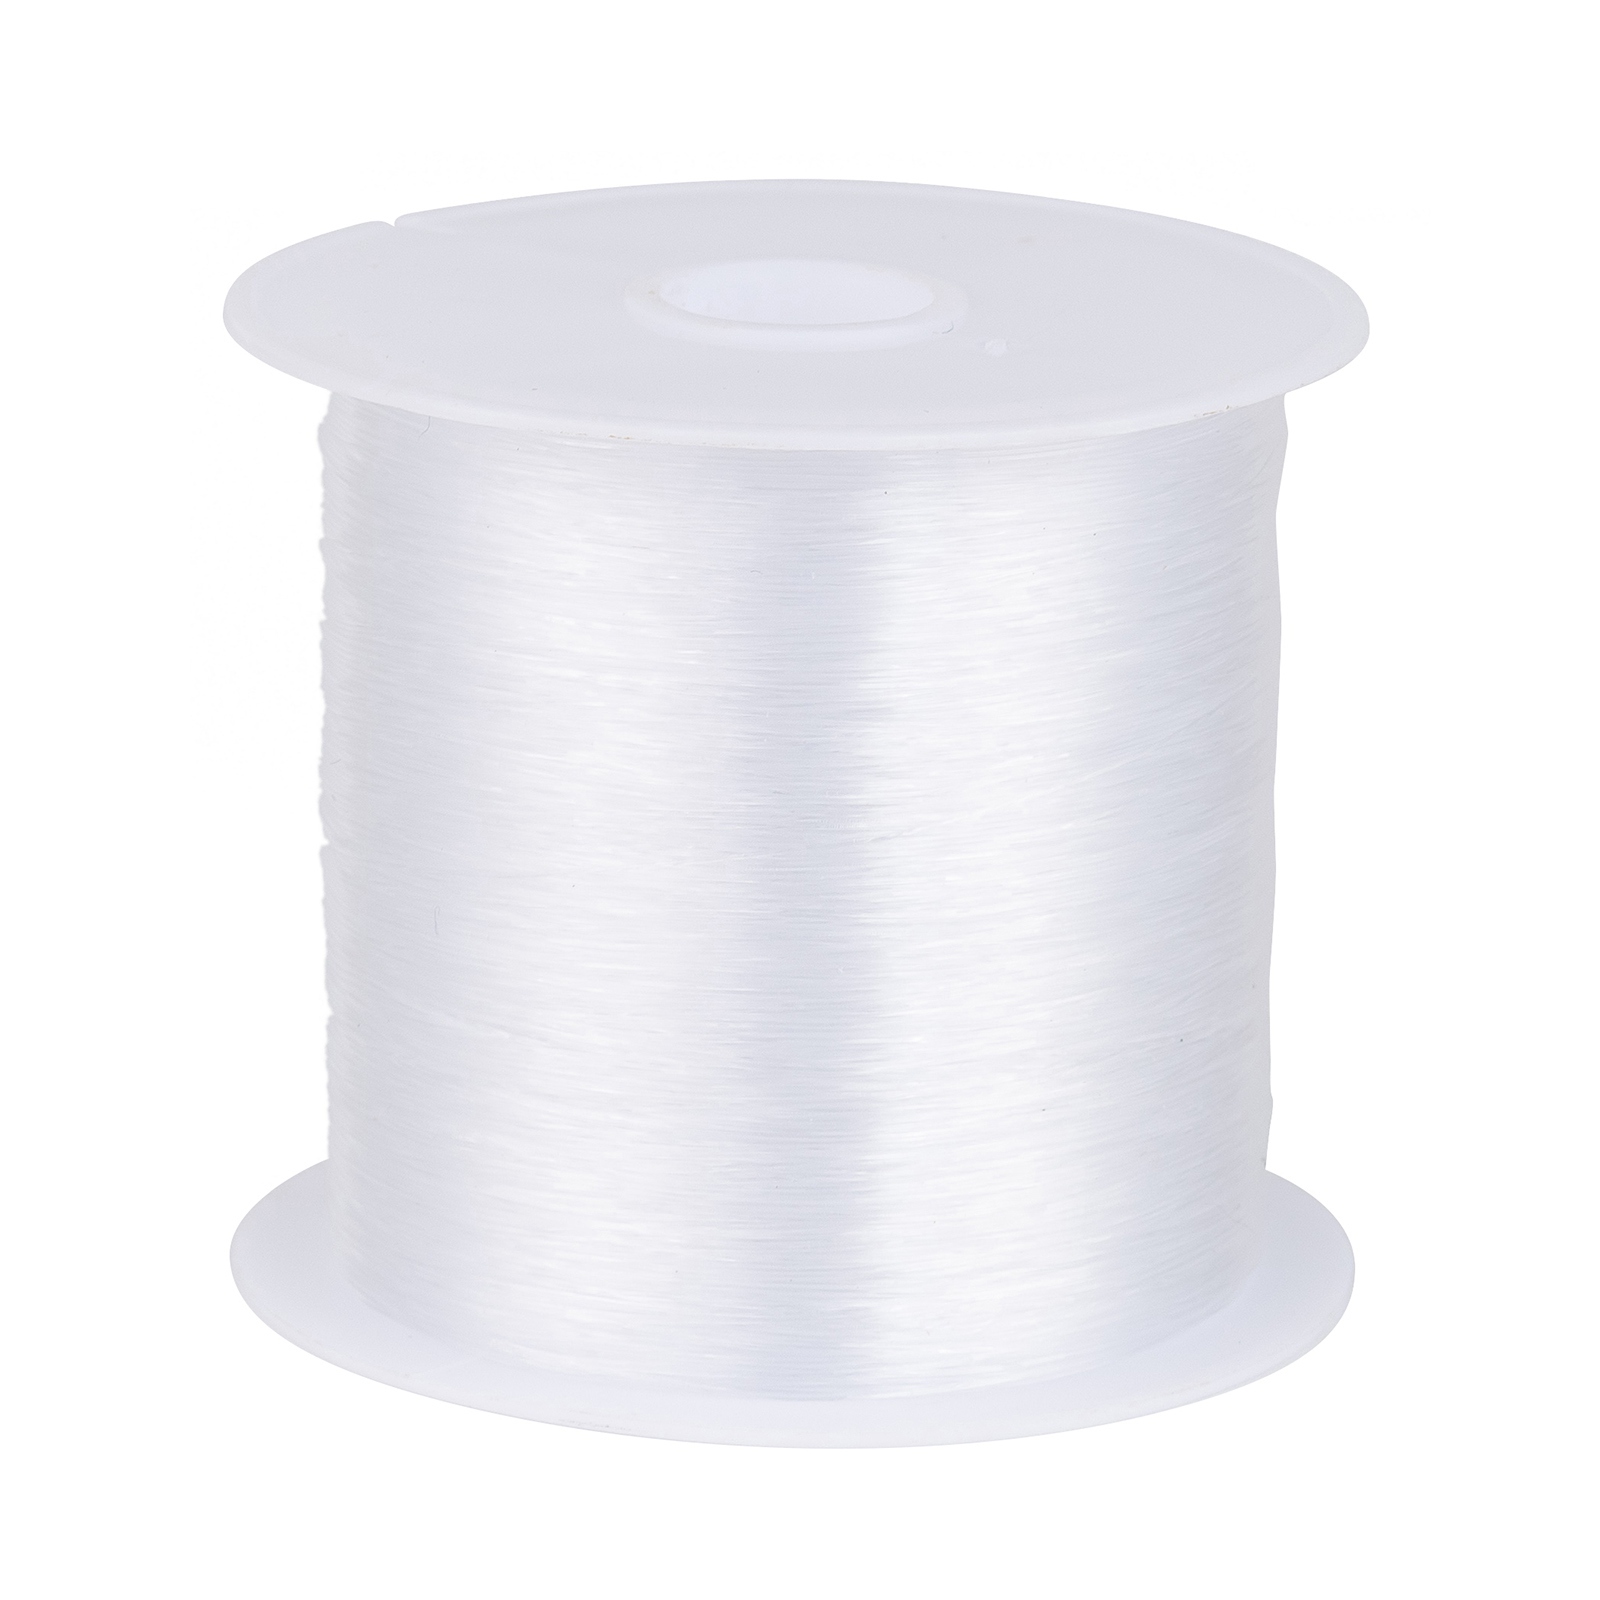 Sewing Thread Nylon Transparent, Transparent Sewing Thread 9